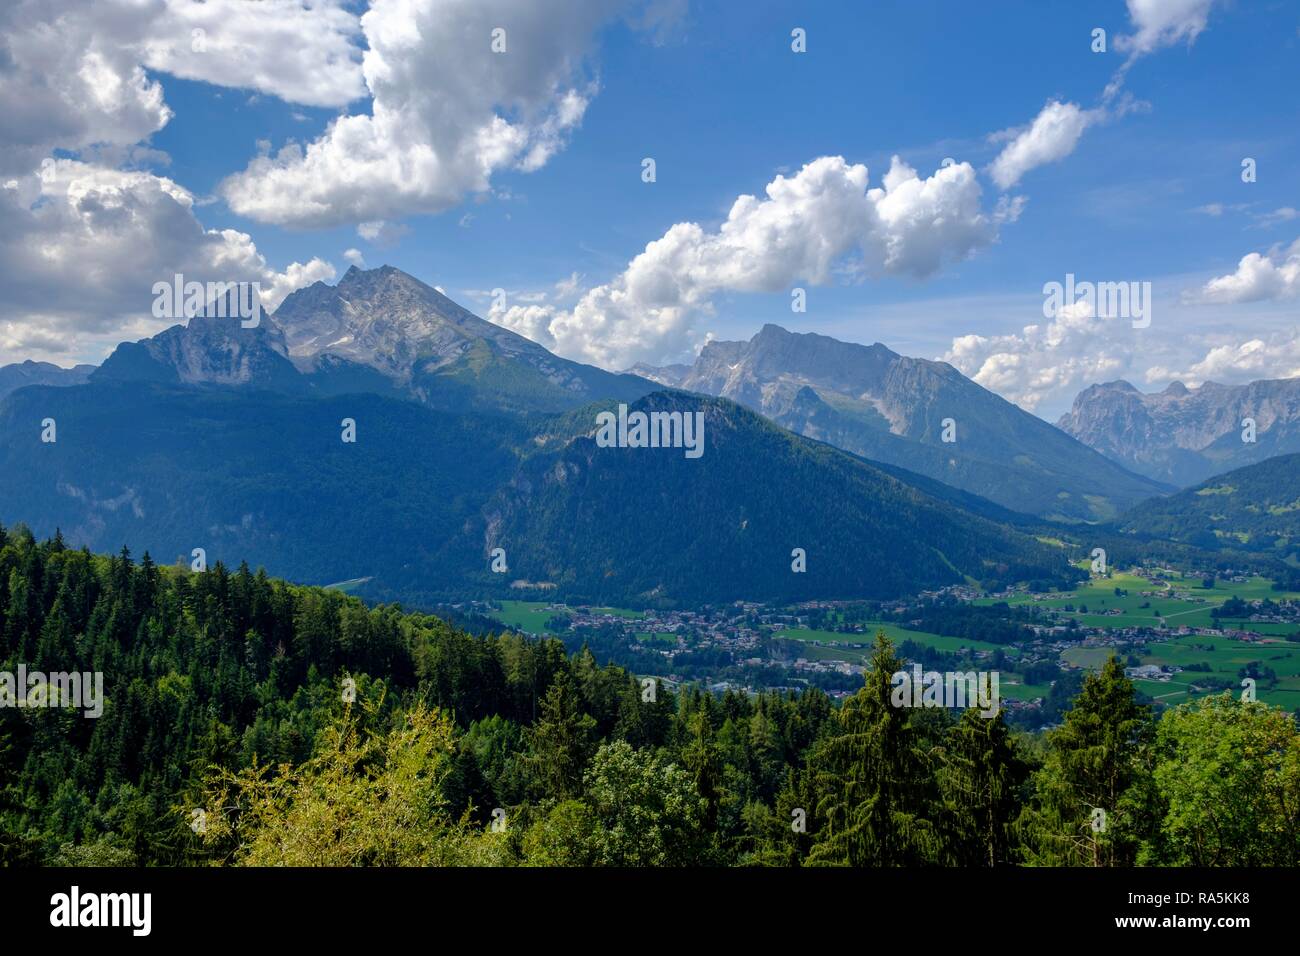 Watzmann Massif, Graslhöhe, Berchtesgaden, Berchtesgaden Alps, Berchtesgadener Land, Upper Bavaria, Bavaria, Germany Stock Photo